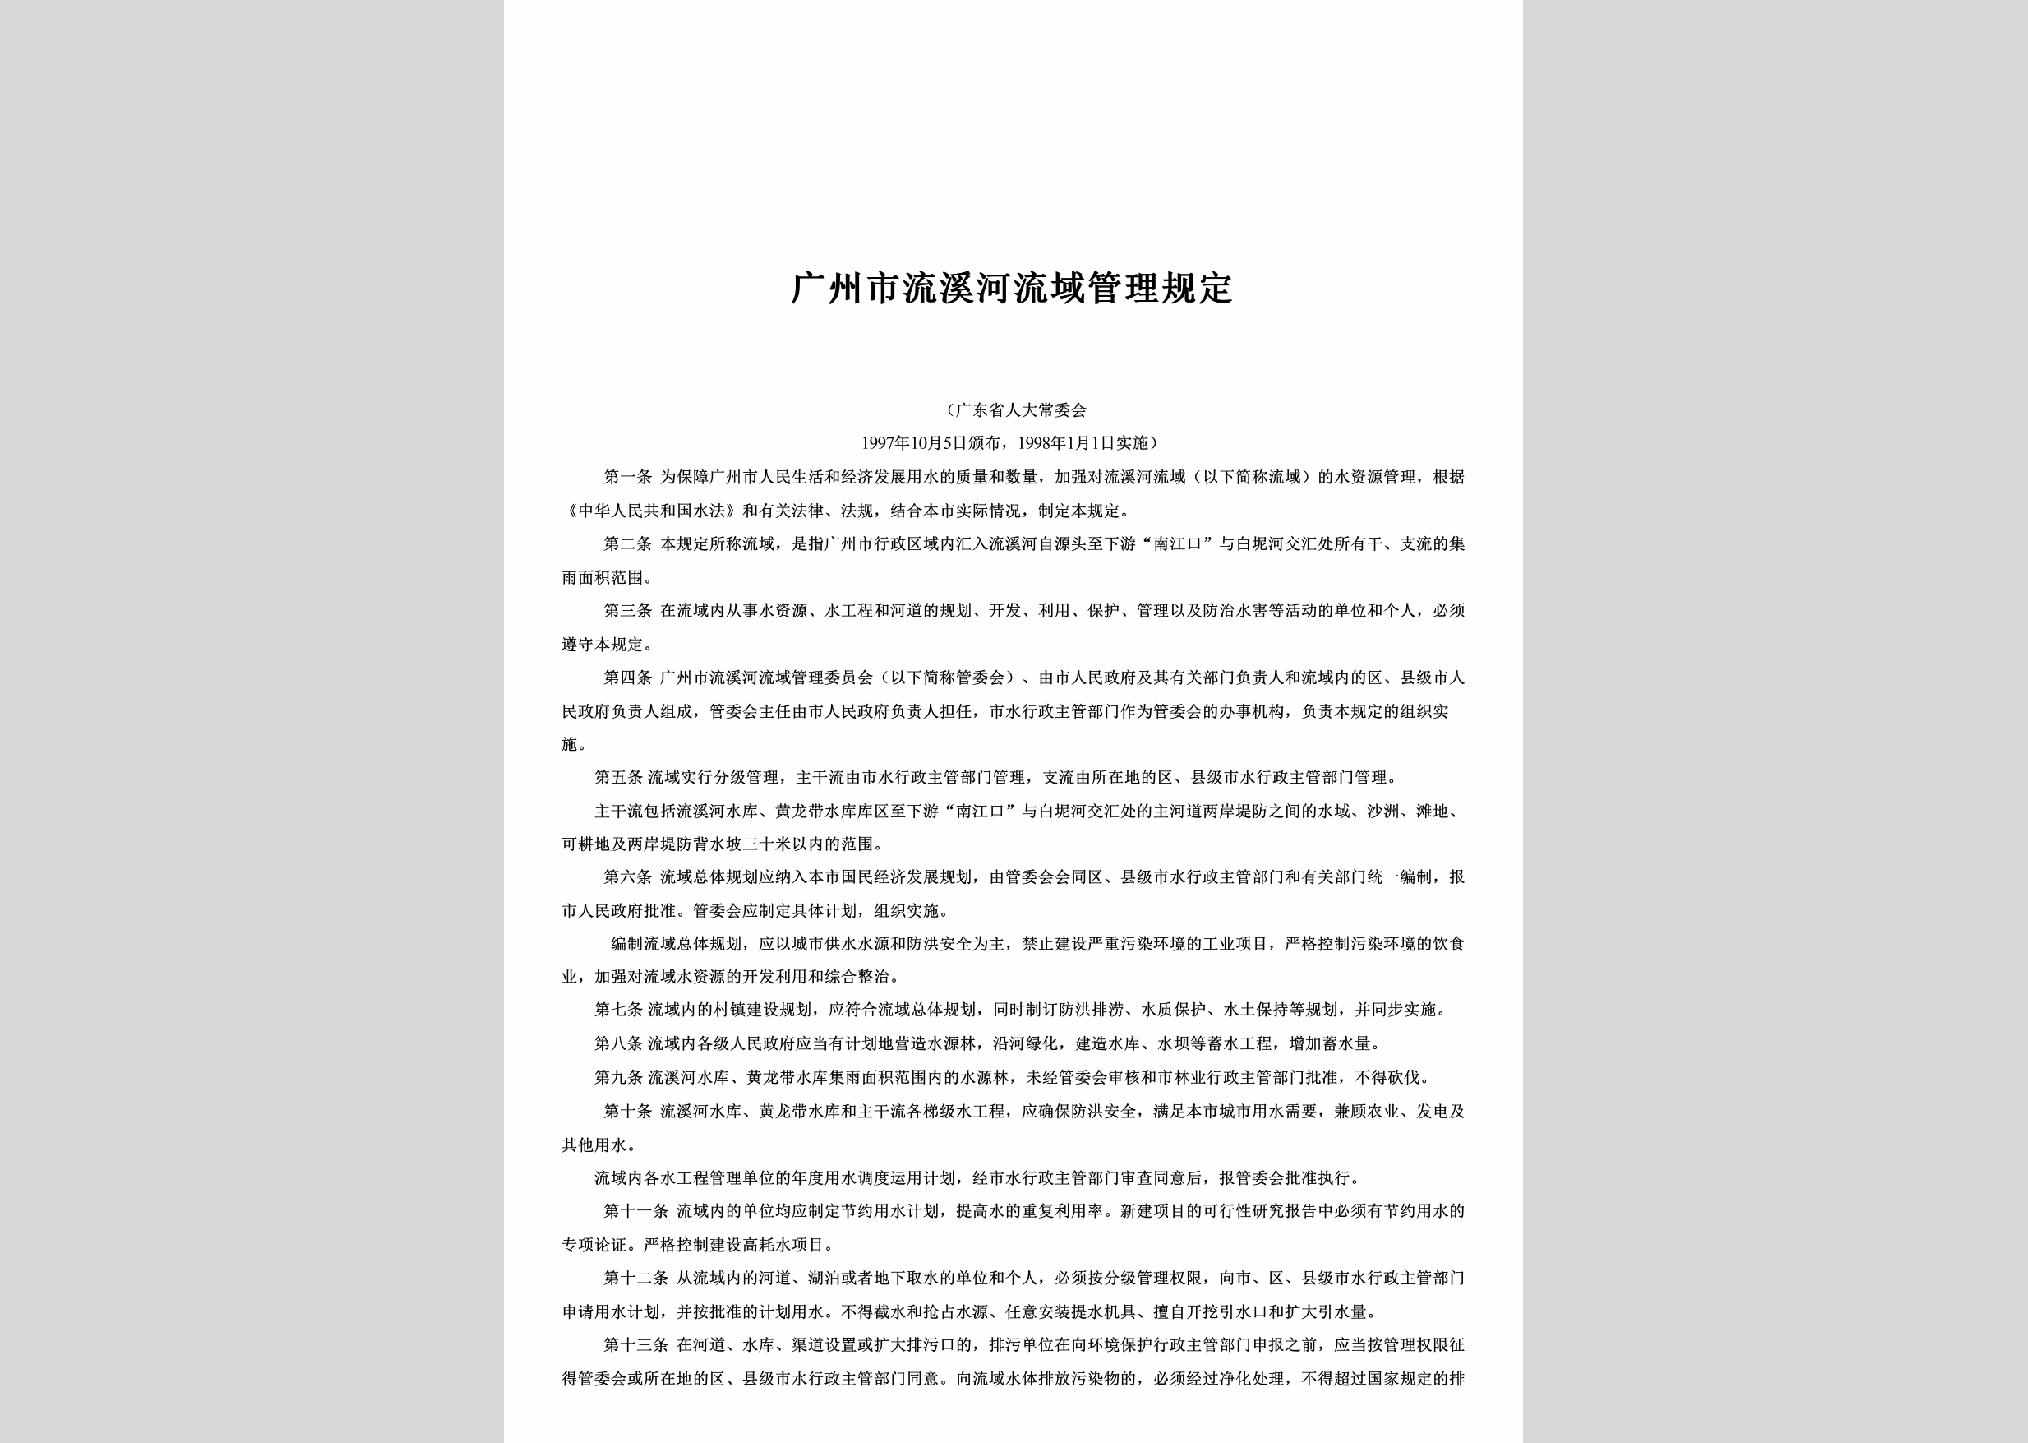 GD-LXHLGLGD-1997：广州市流溪河流域管理规定